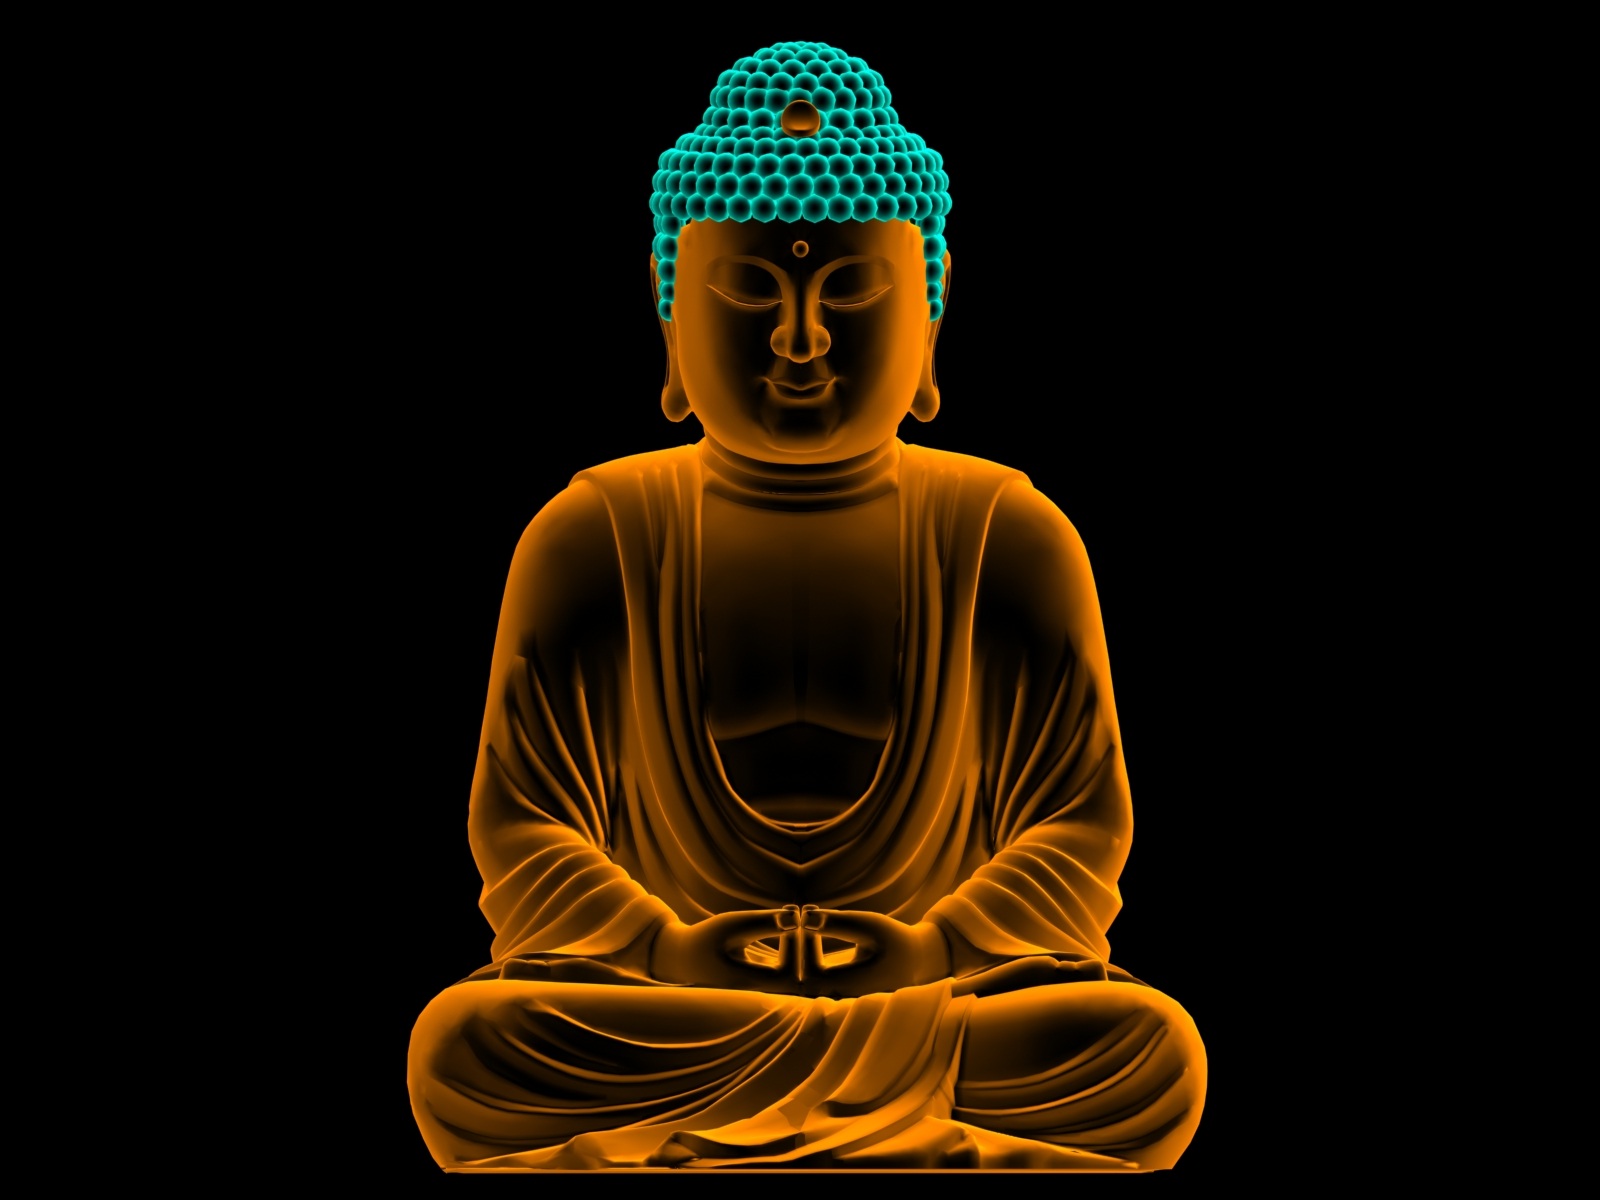 Buddha HD Wallpaper Image For Lord